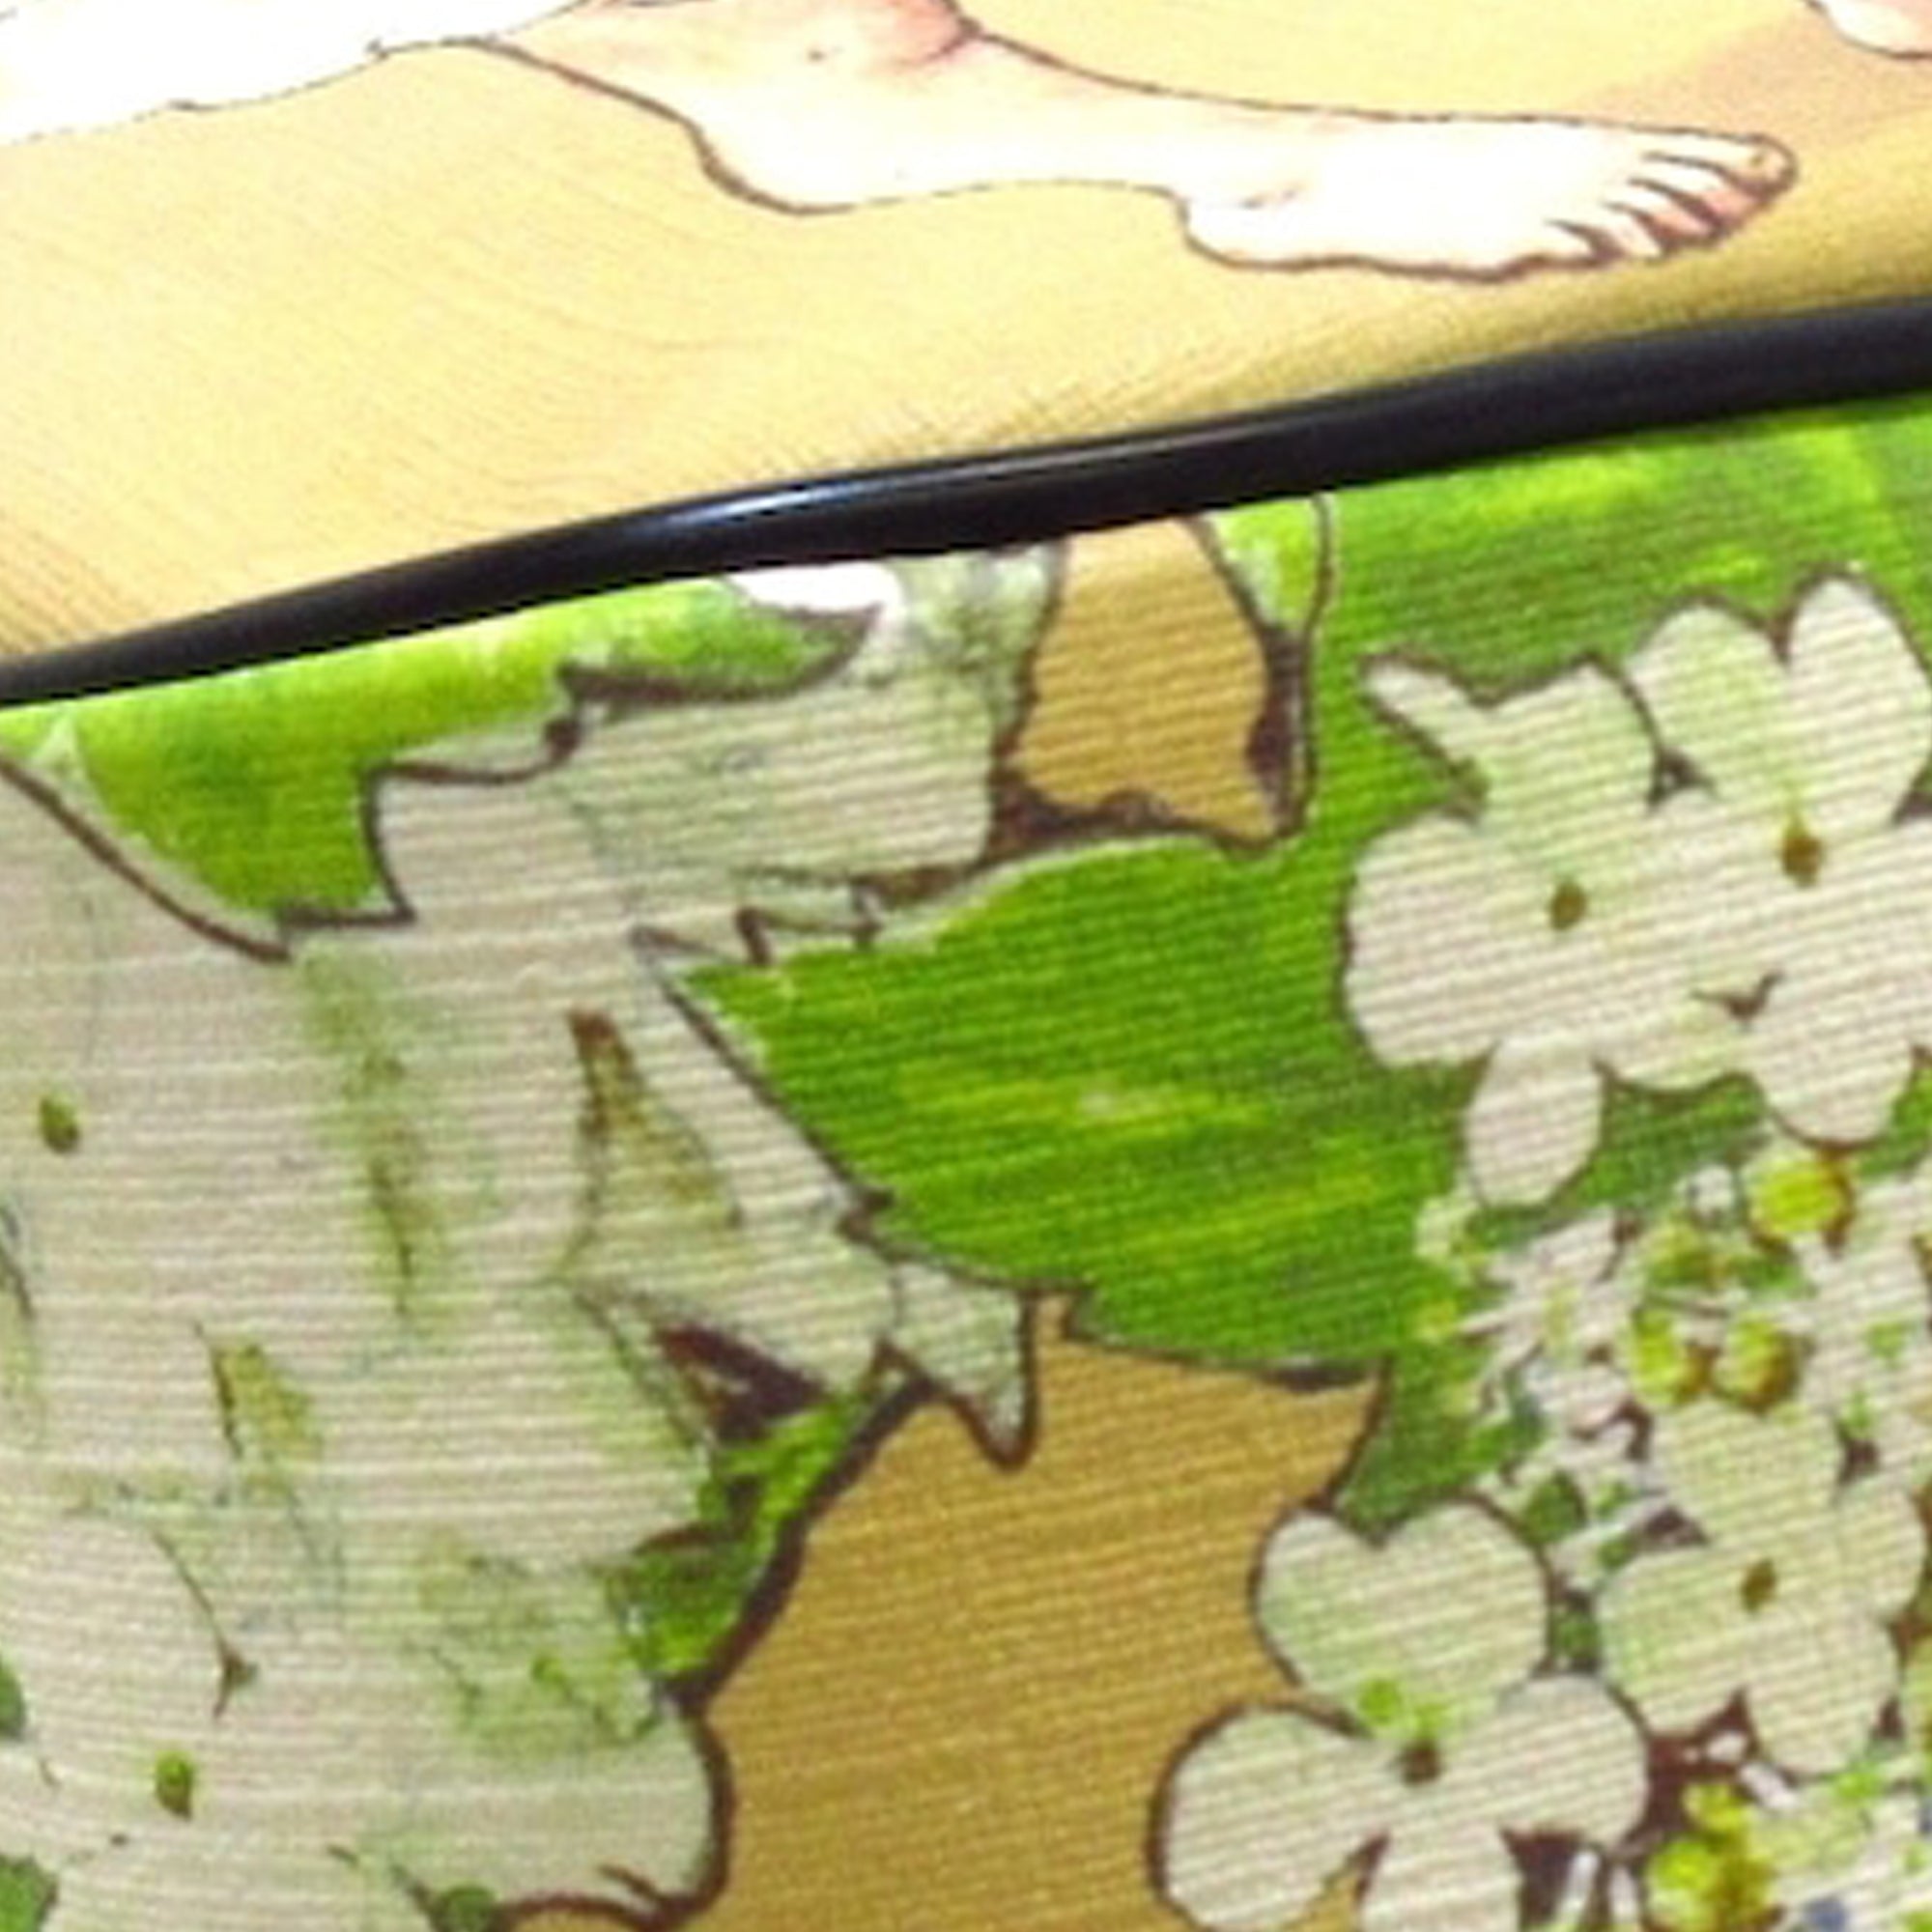 Green Gucci GG Supreme Children's Fairy Print Backpack - Atelier-lumieresShops Revival